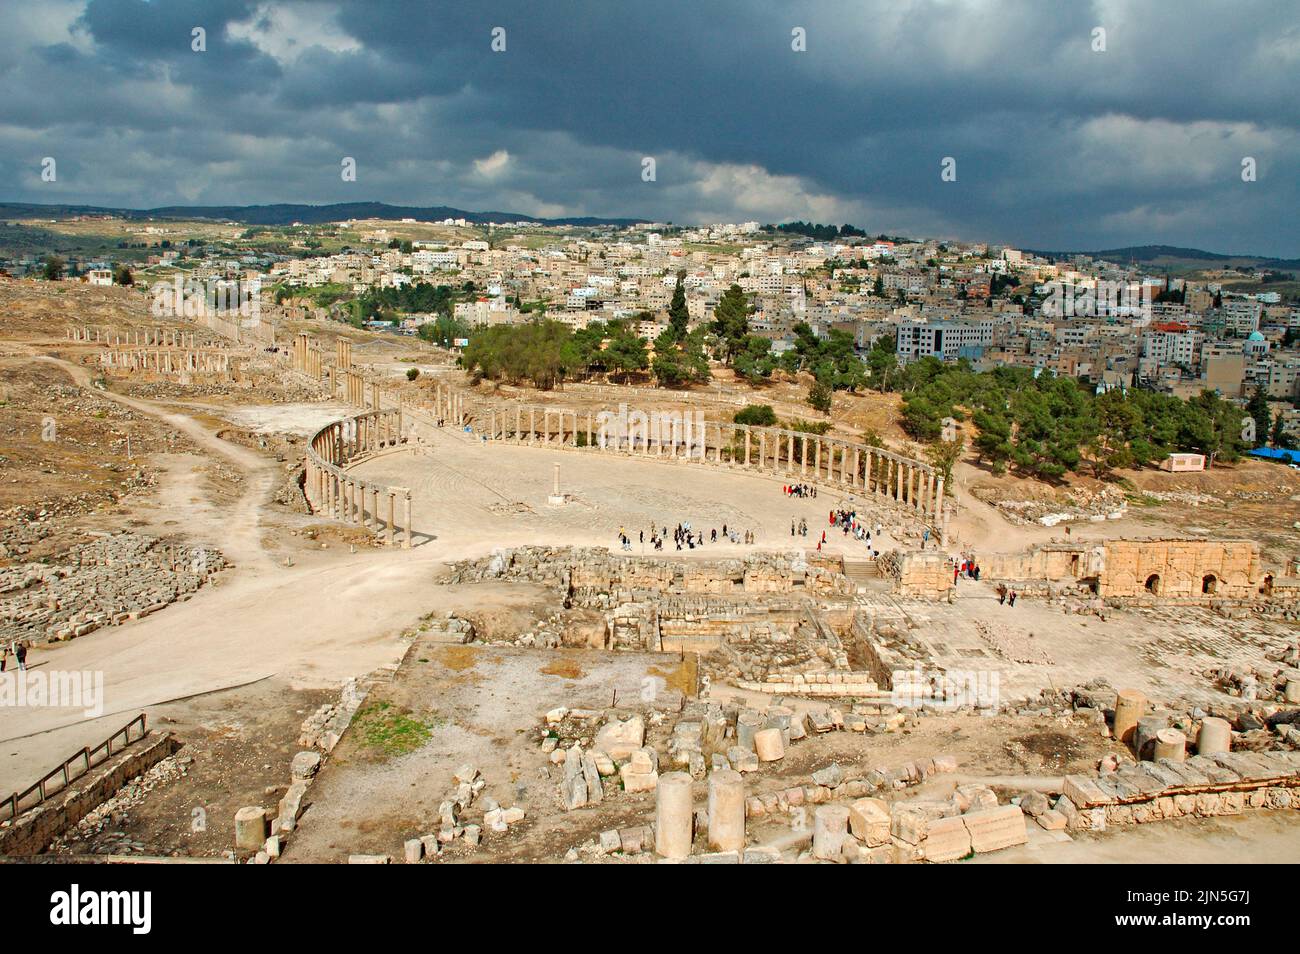 Jordan, Archeological site of Jerash Stock Photo